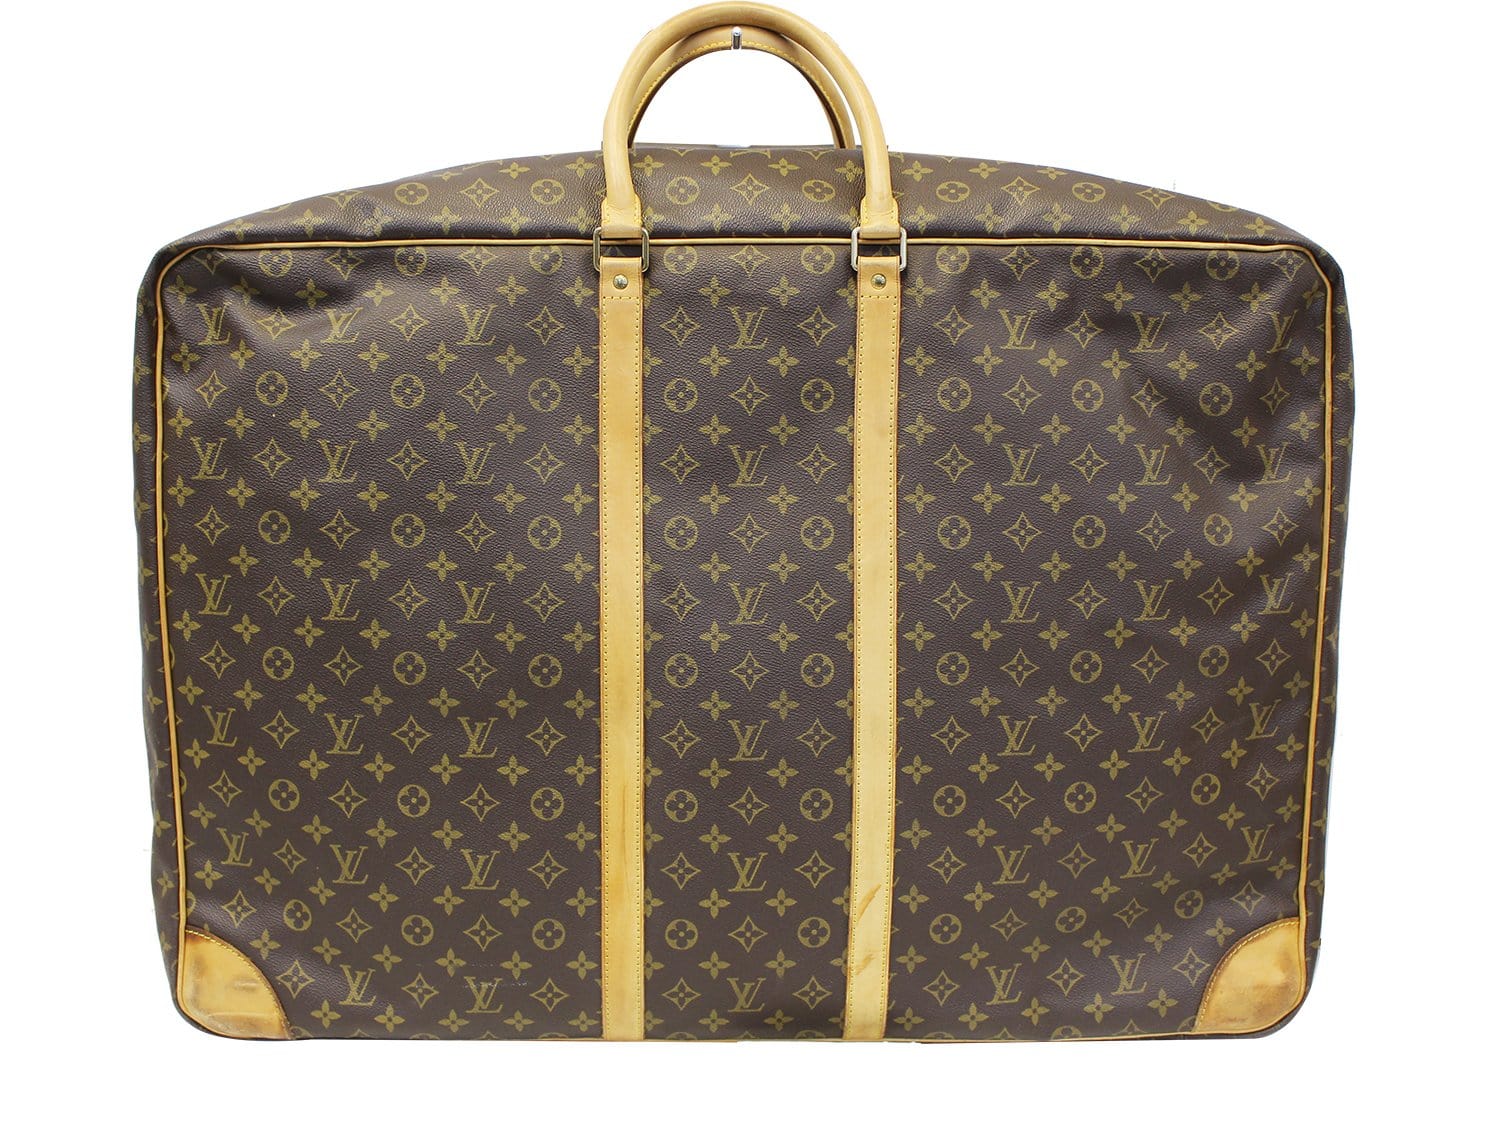 Louis Vuitton Suitcase - Monogram Other